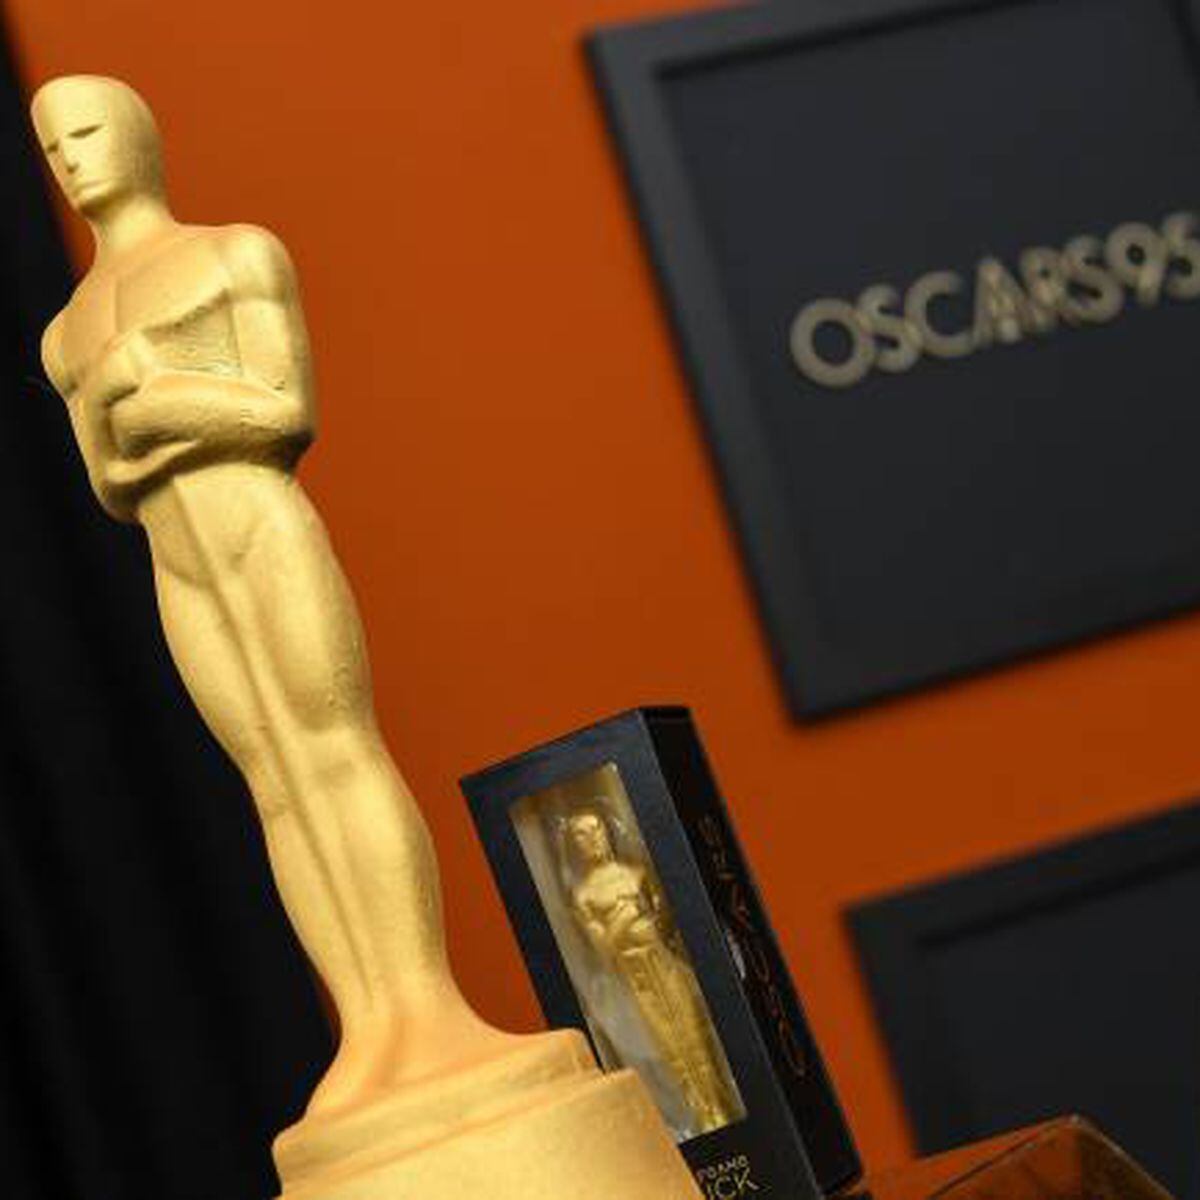 Diversity Rankings of 2021 Oscar Nominees